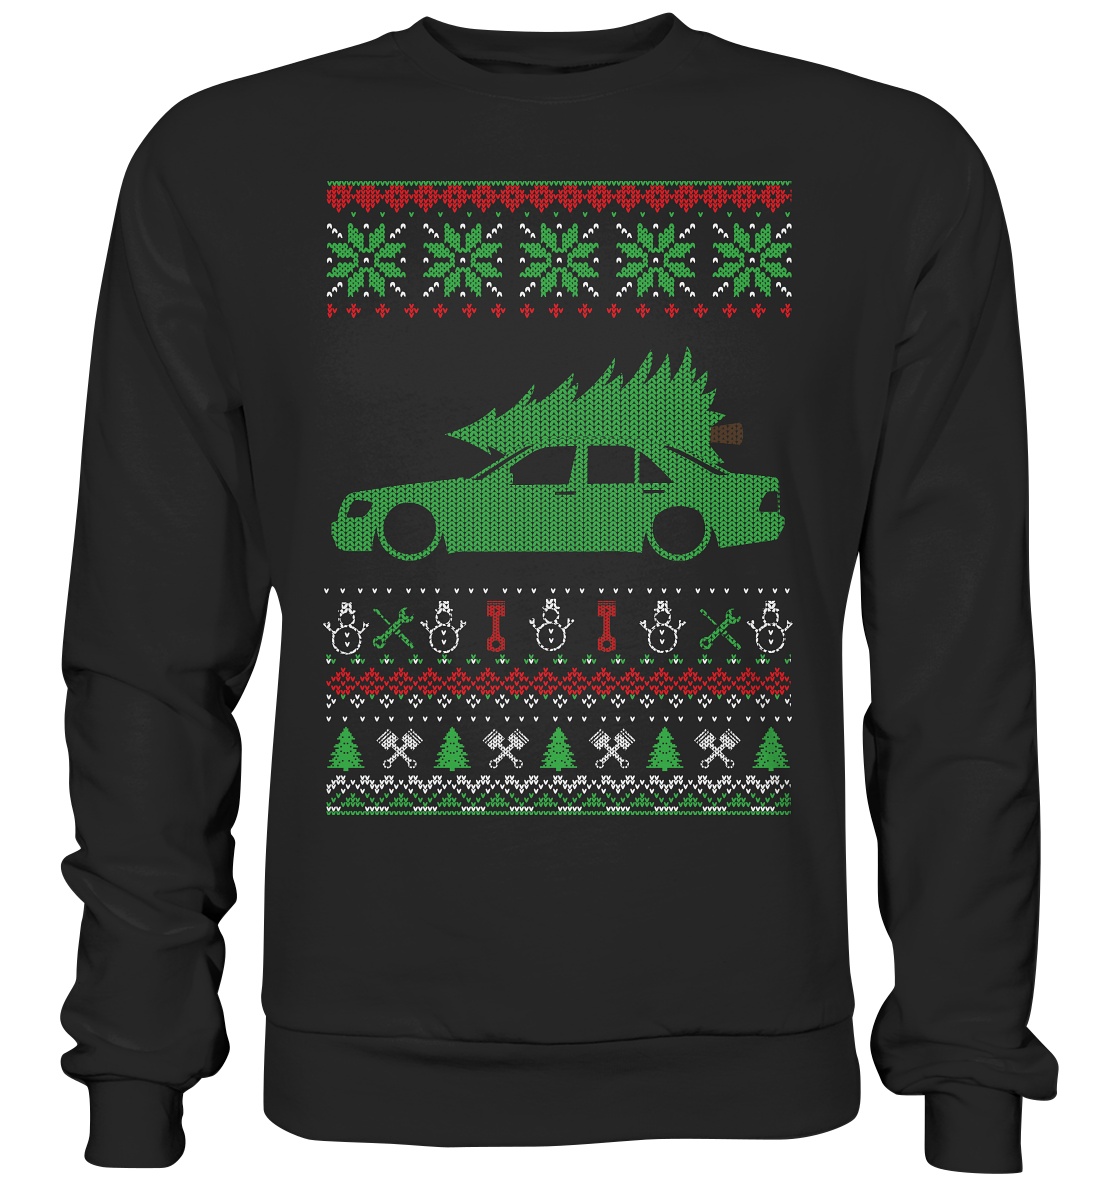 CODUGLY_MGKW140 - Premium Sweatshirt